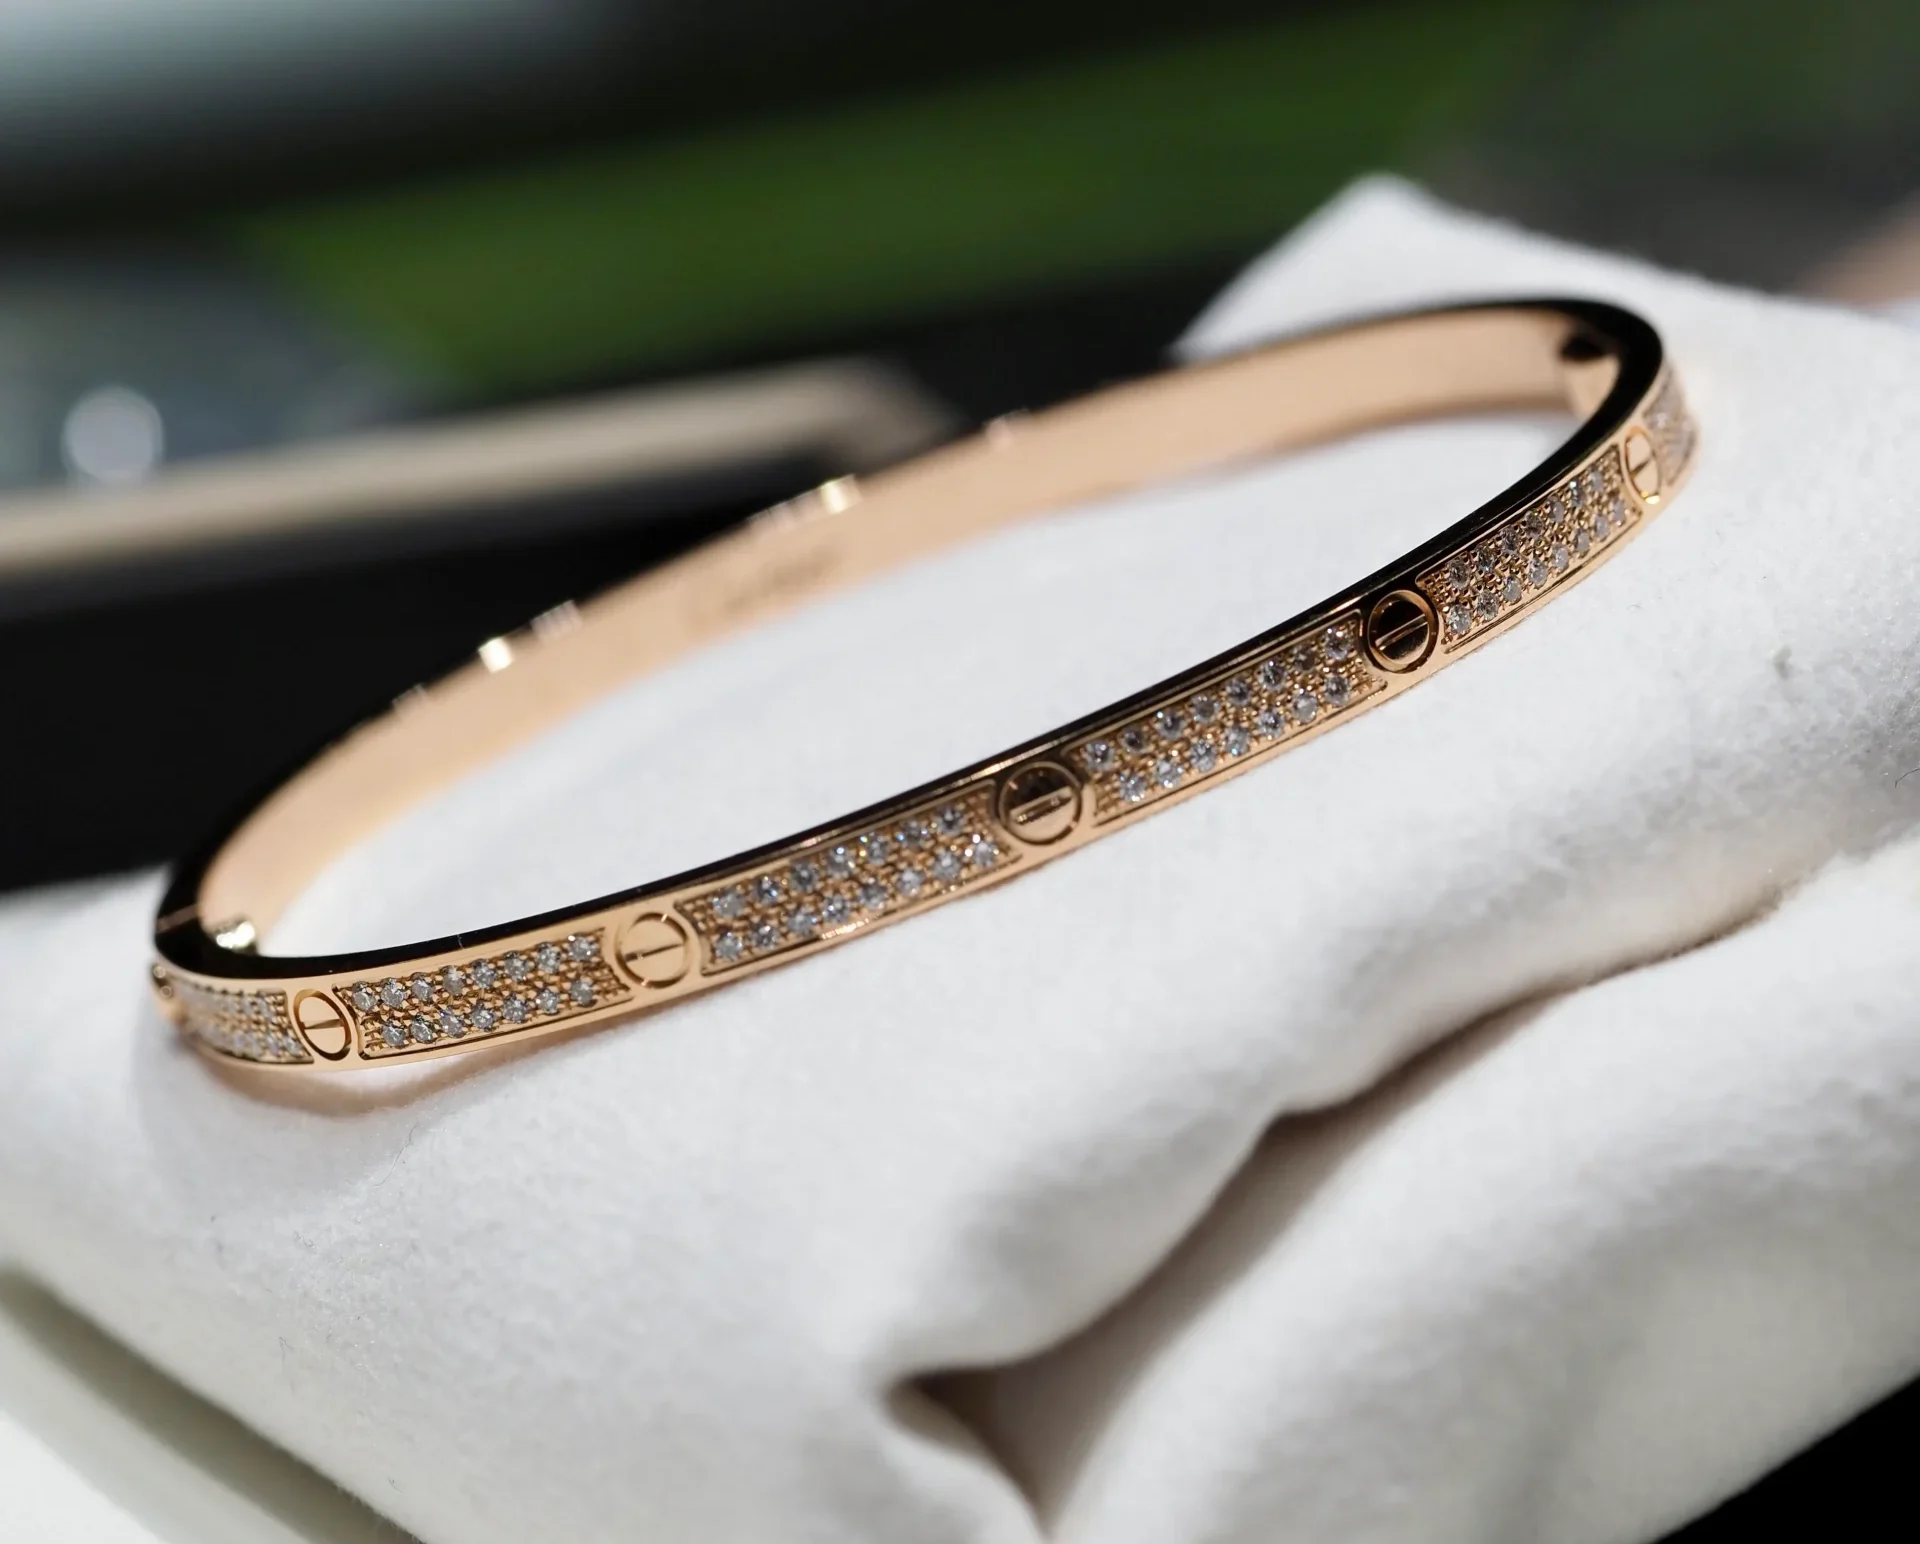 Shiny Cartier Love bracelet with diamonds sitting on a soft cushion